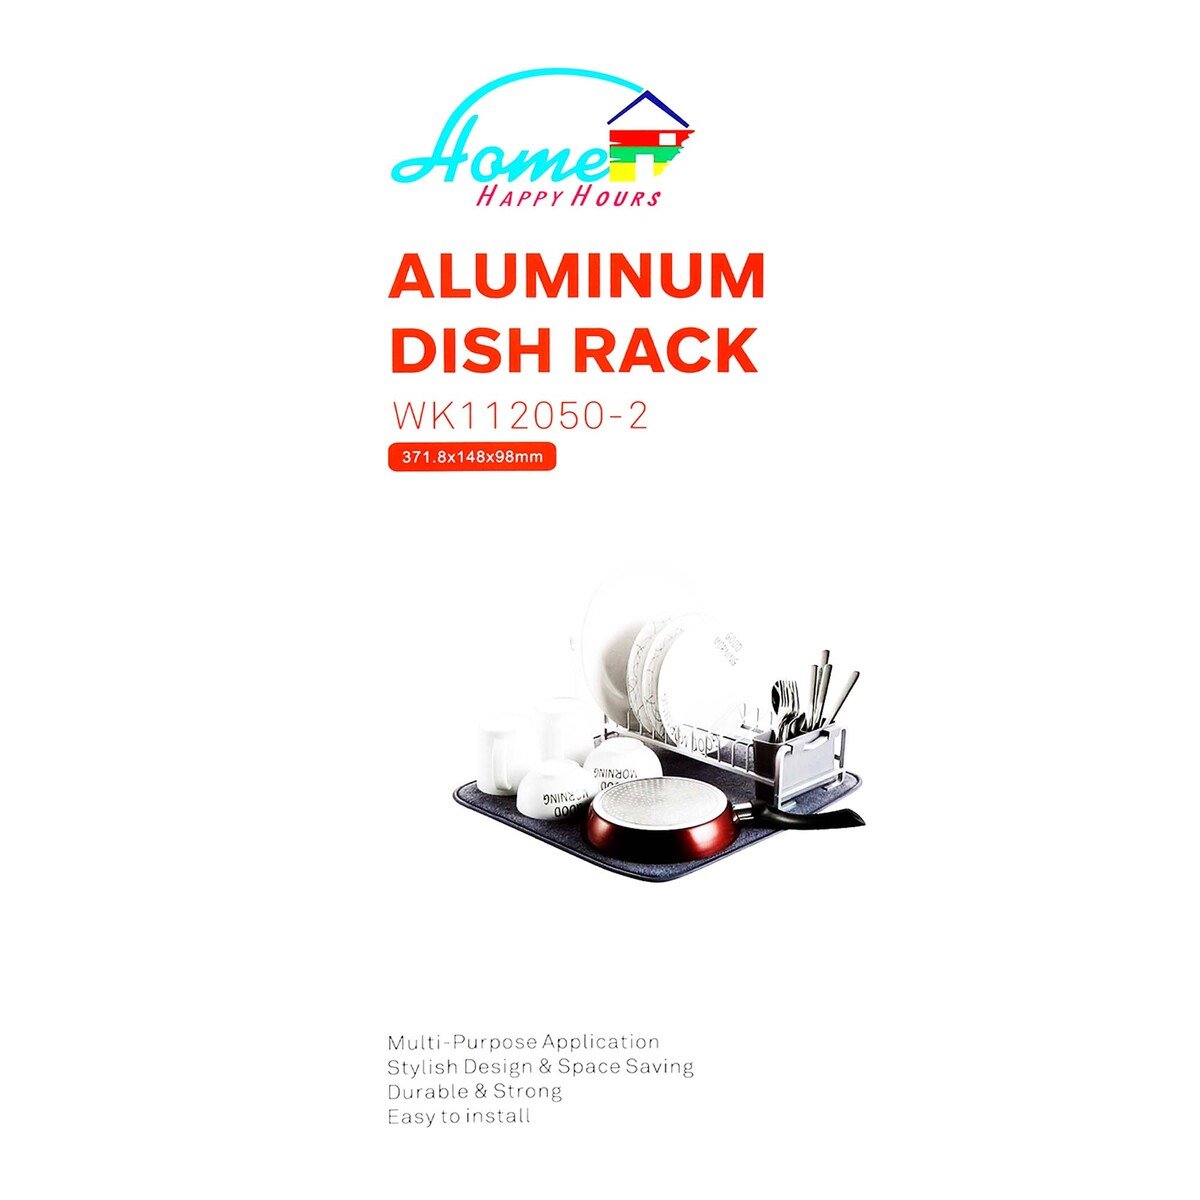 Home Aluminum Dish Rack WK112050